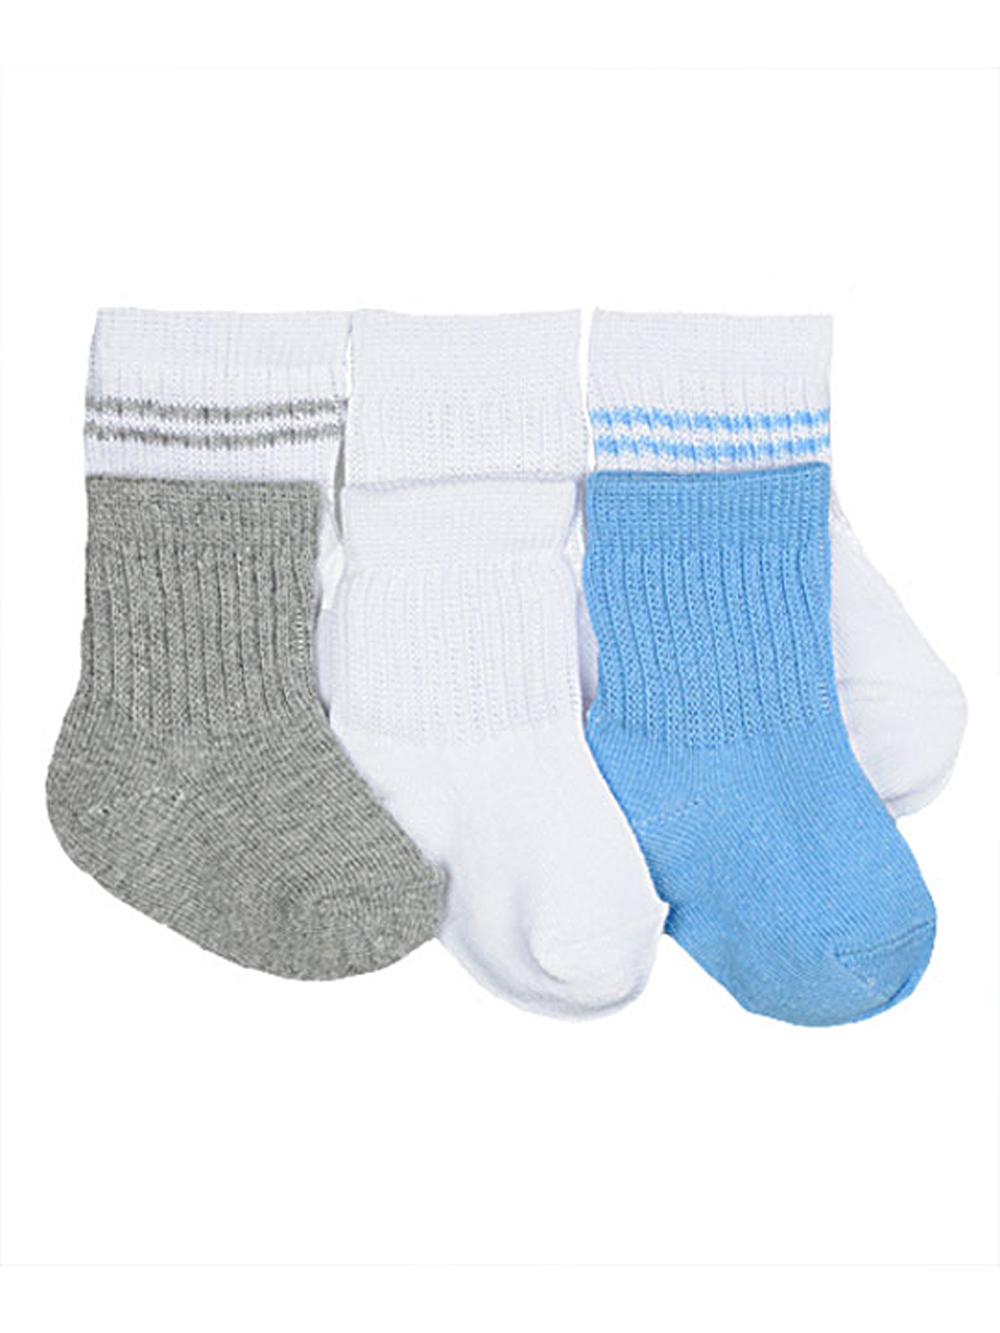 Blue White and Gray Socks